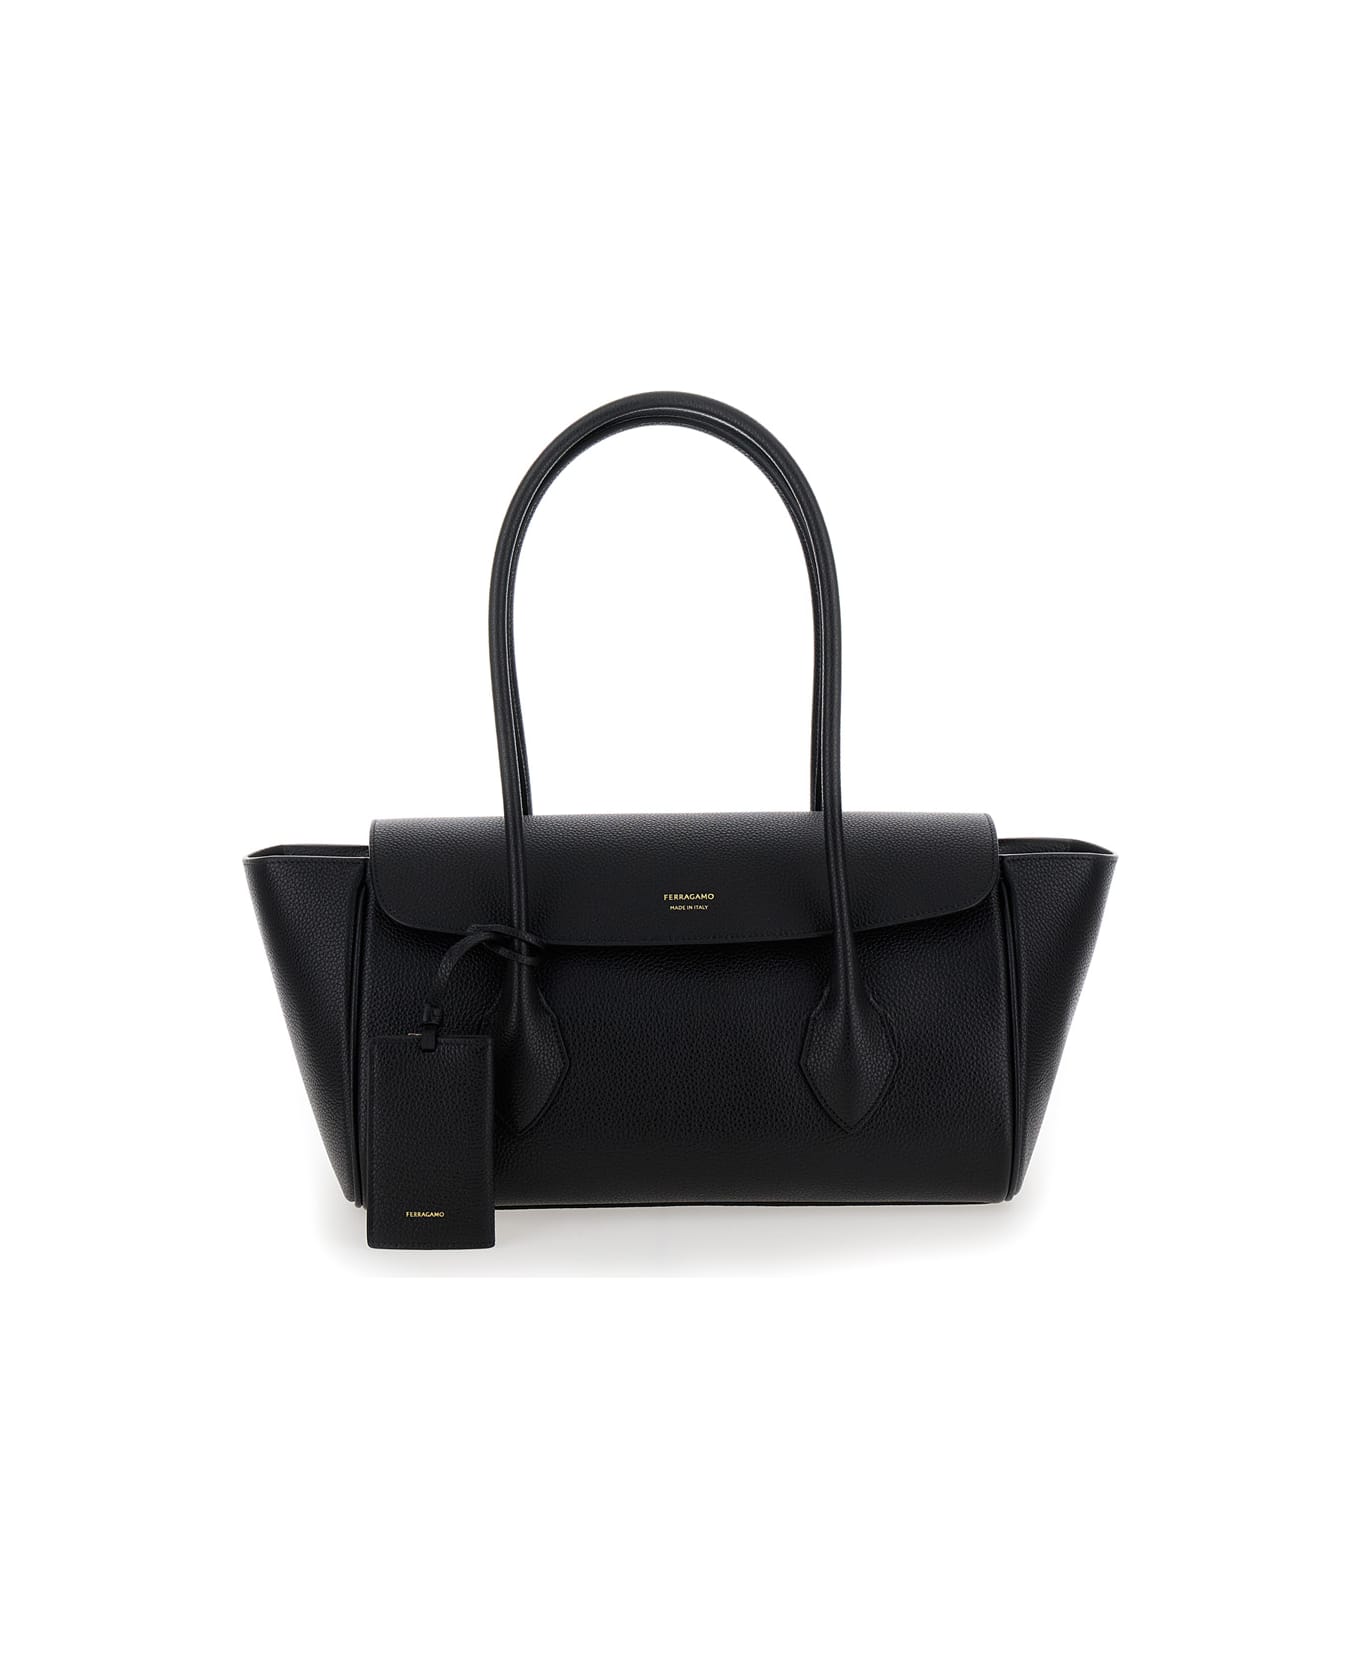 Ferragamo 'east-west M' Black Handbag With Logo Detail In Hammered Leather Woman - Black